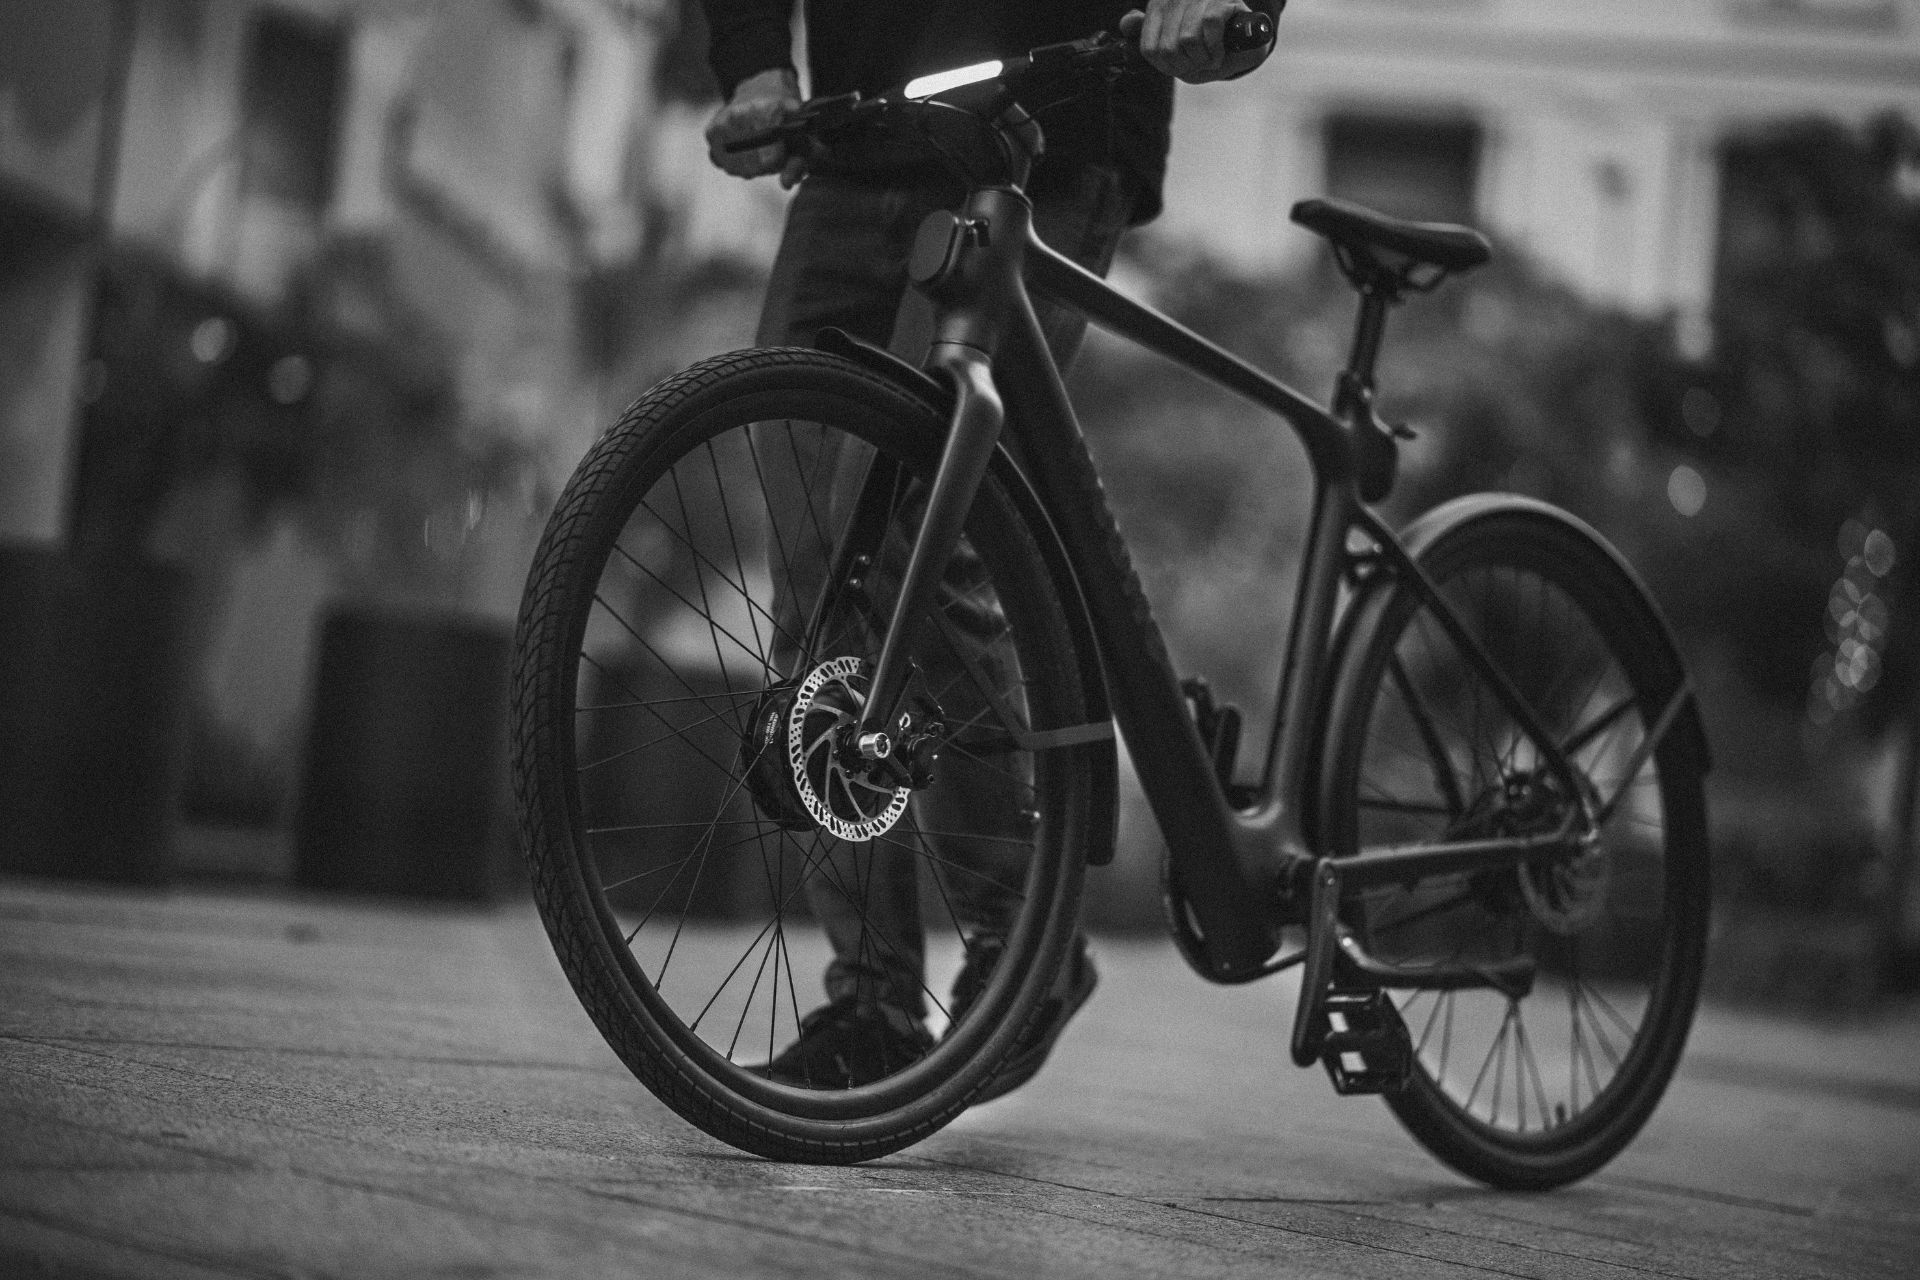 Modmo Saigon+ Electric Bicycle - RRP £2800 - Size M (Rider: 140-155cm) - Image 10 of 19